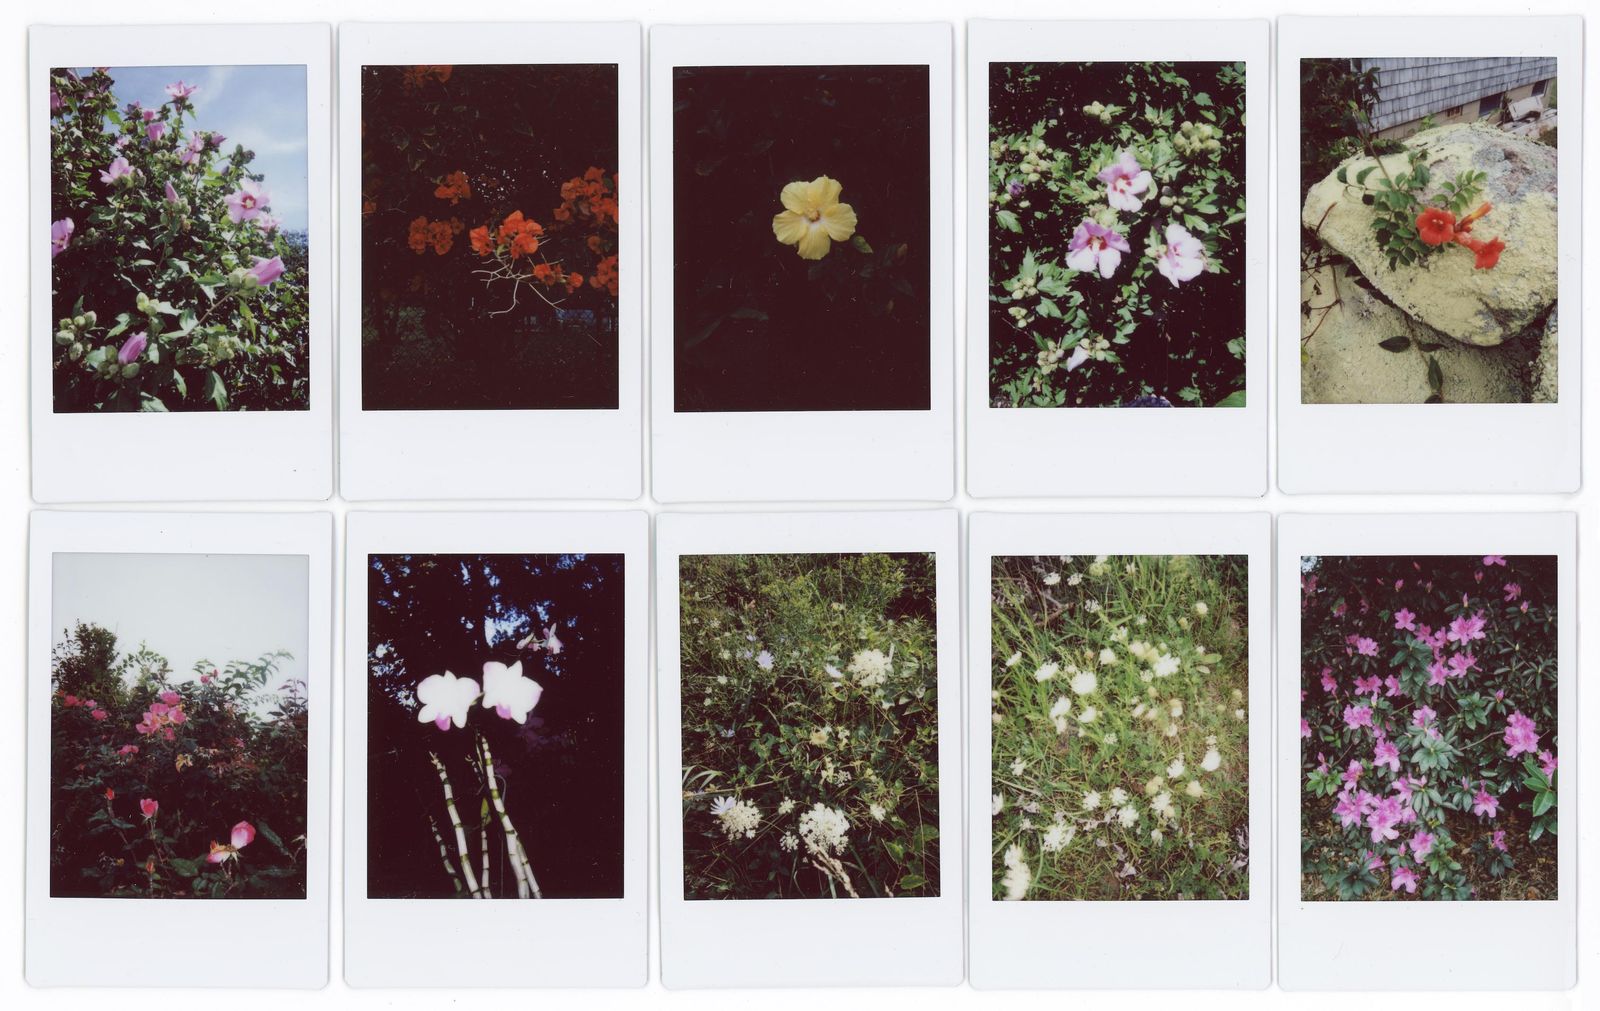 © RACHEL TREIDE - "A Minute Fraction of All the Flowers I've Ever Seen," photographs 1-10